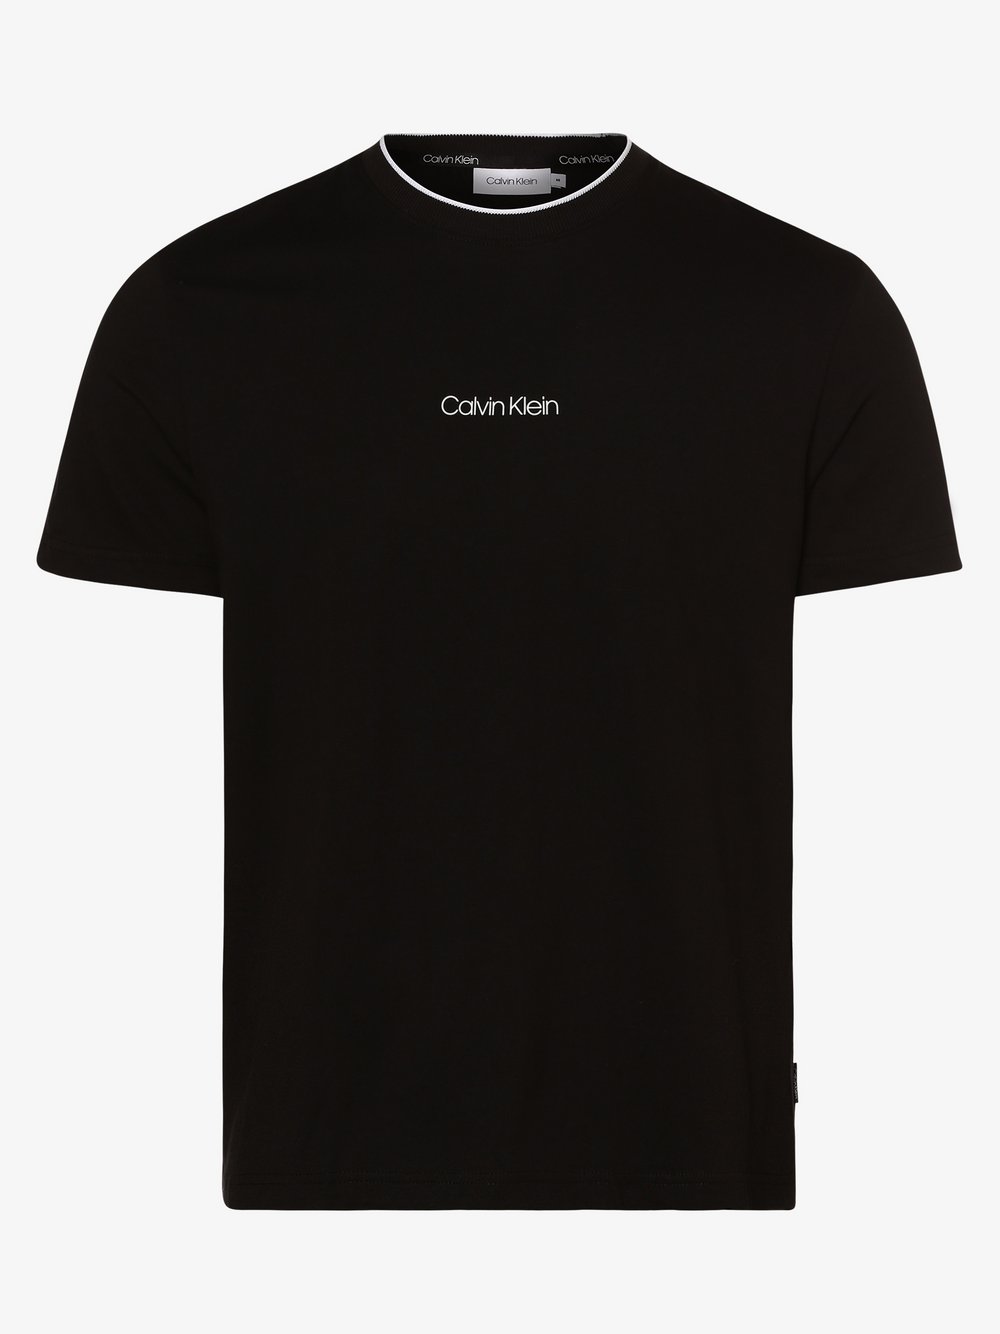 Calvin Klein - T-shirt męski, czarny